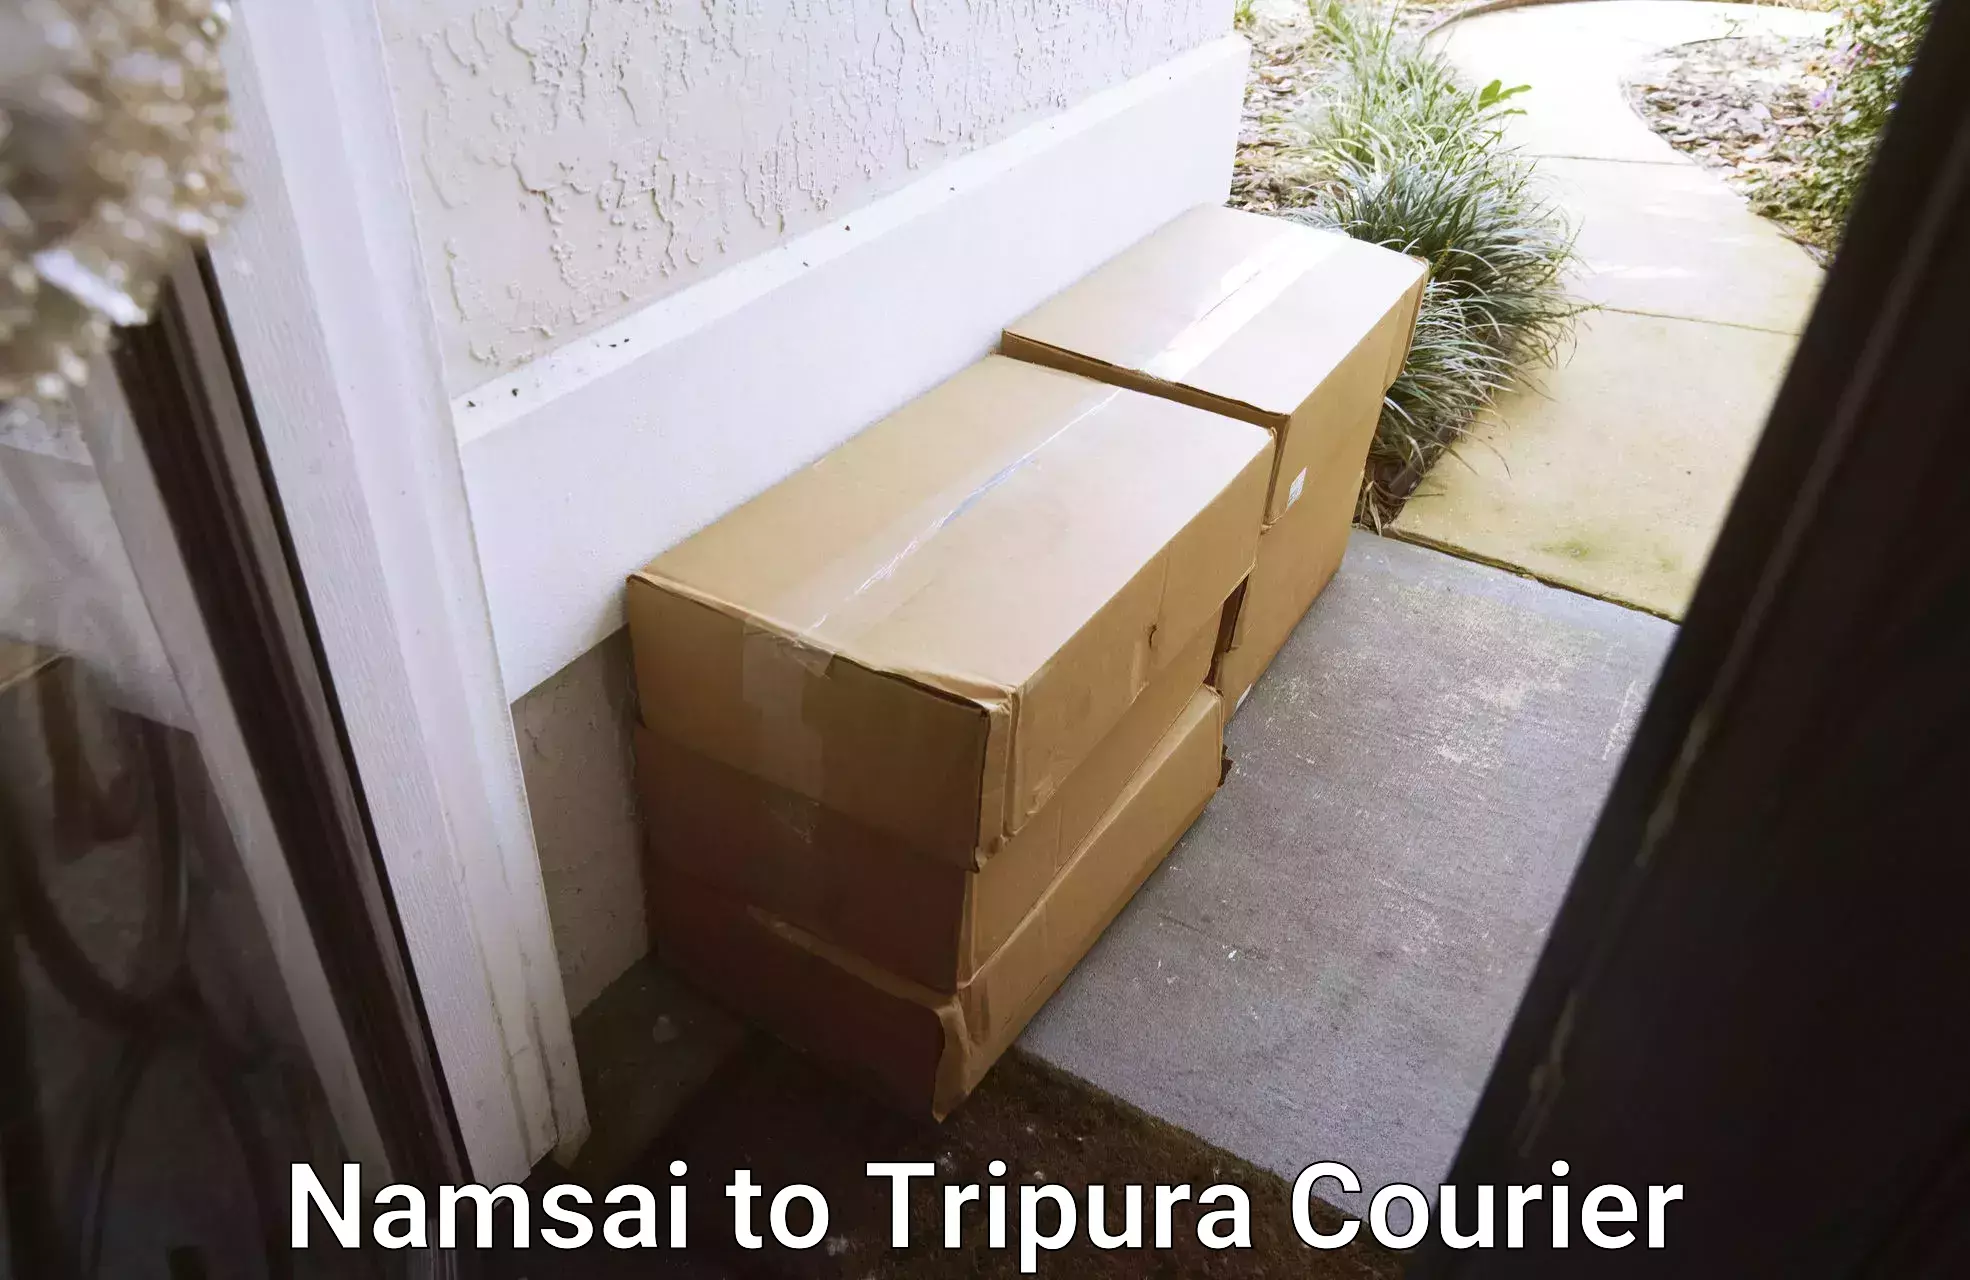 Express courier capabilities Namsai to Udaipur Tripura